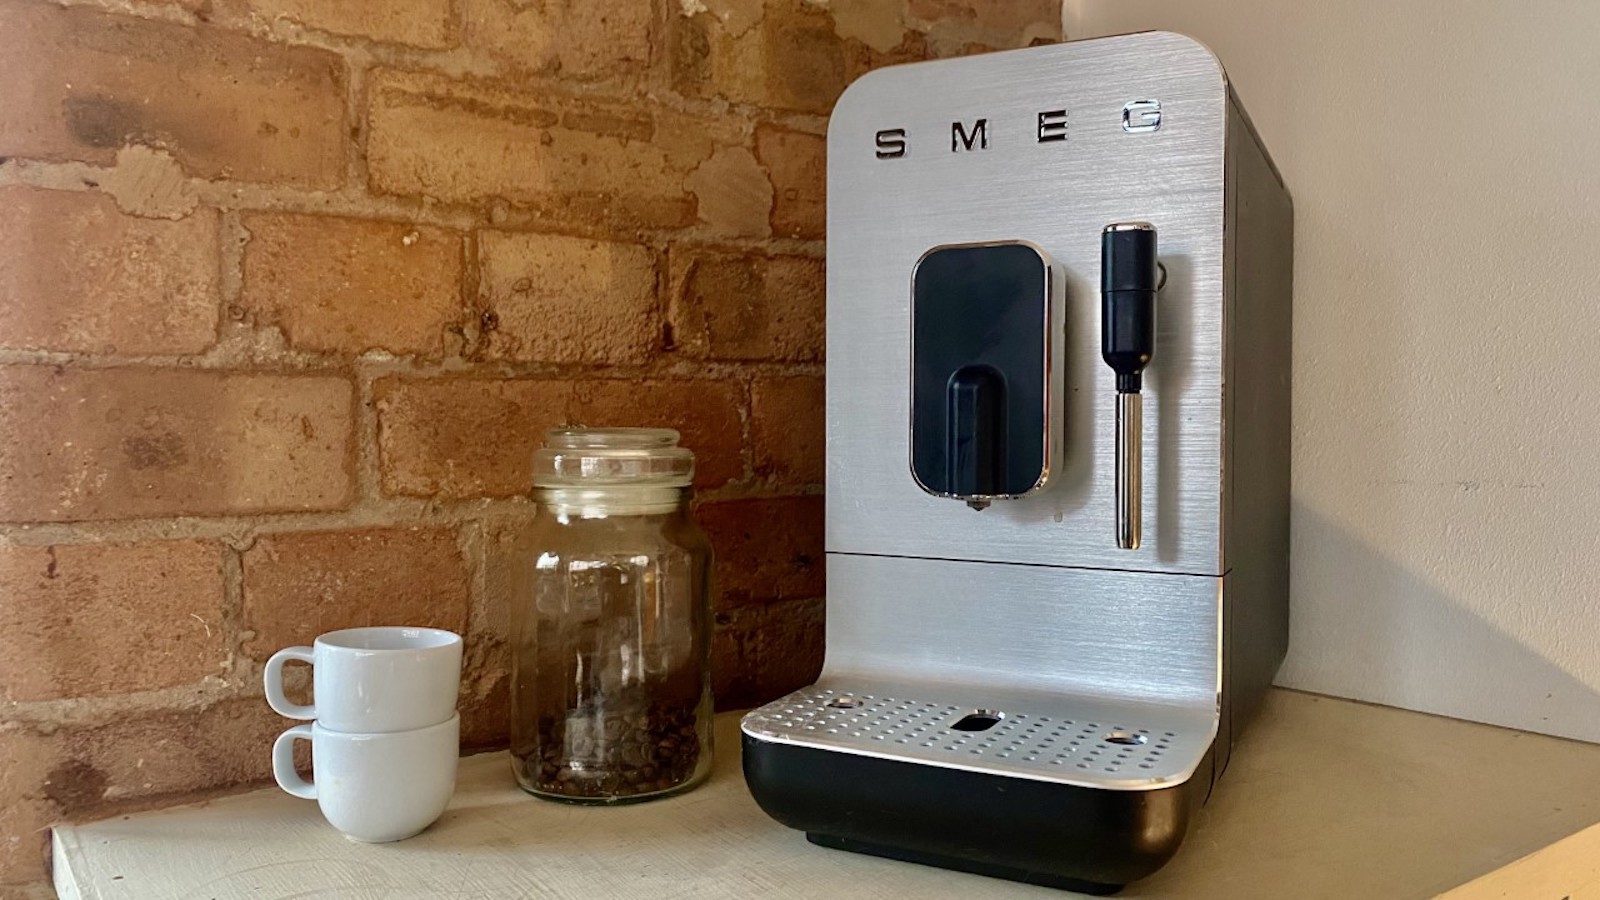  Smeg coffee machine - Most stylish bean-to-cup machine